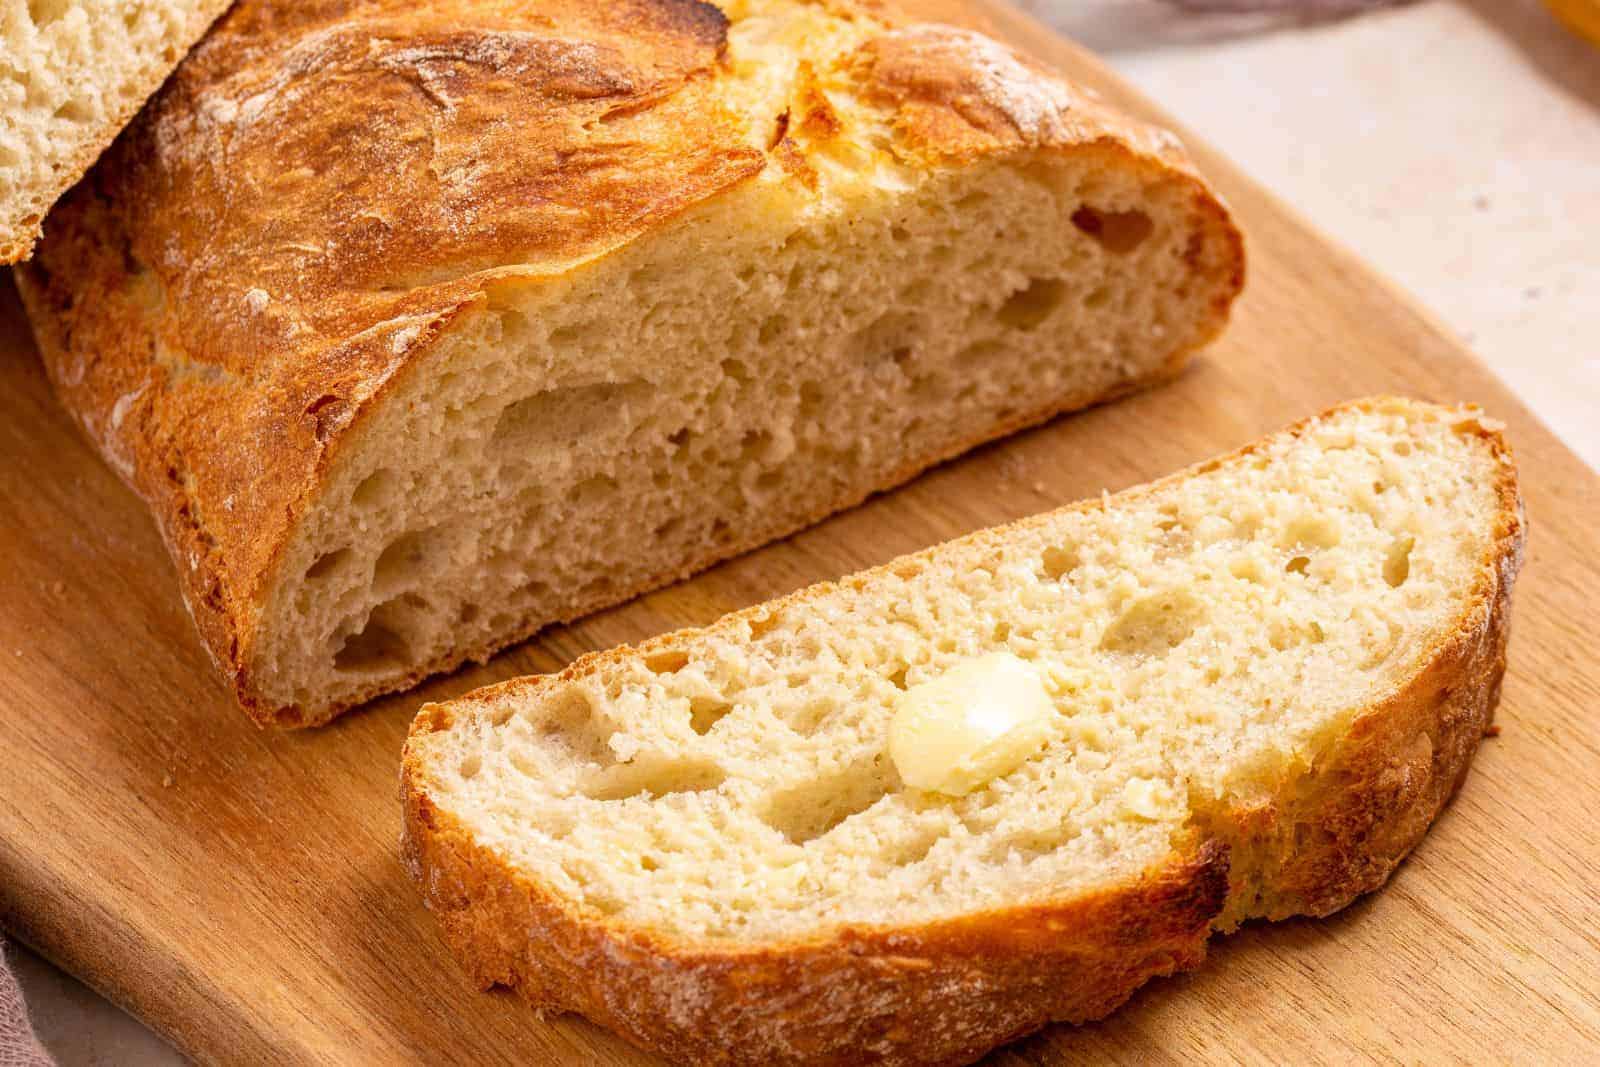 An Italian artisan loaf of bread on a wooden cutting board.